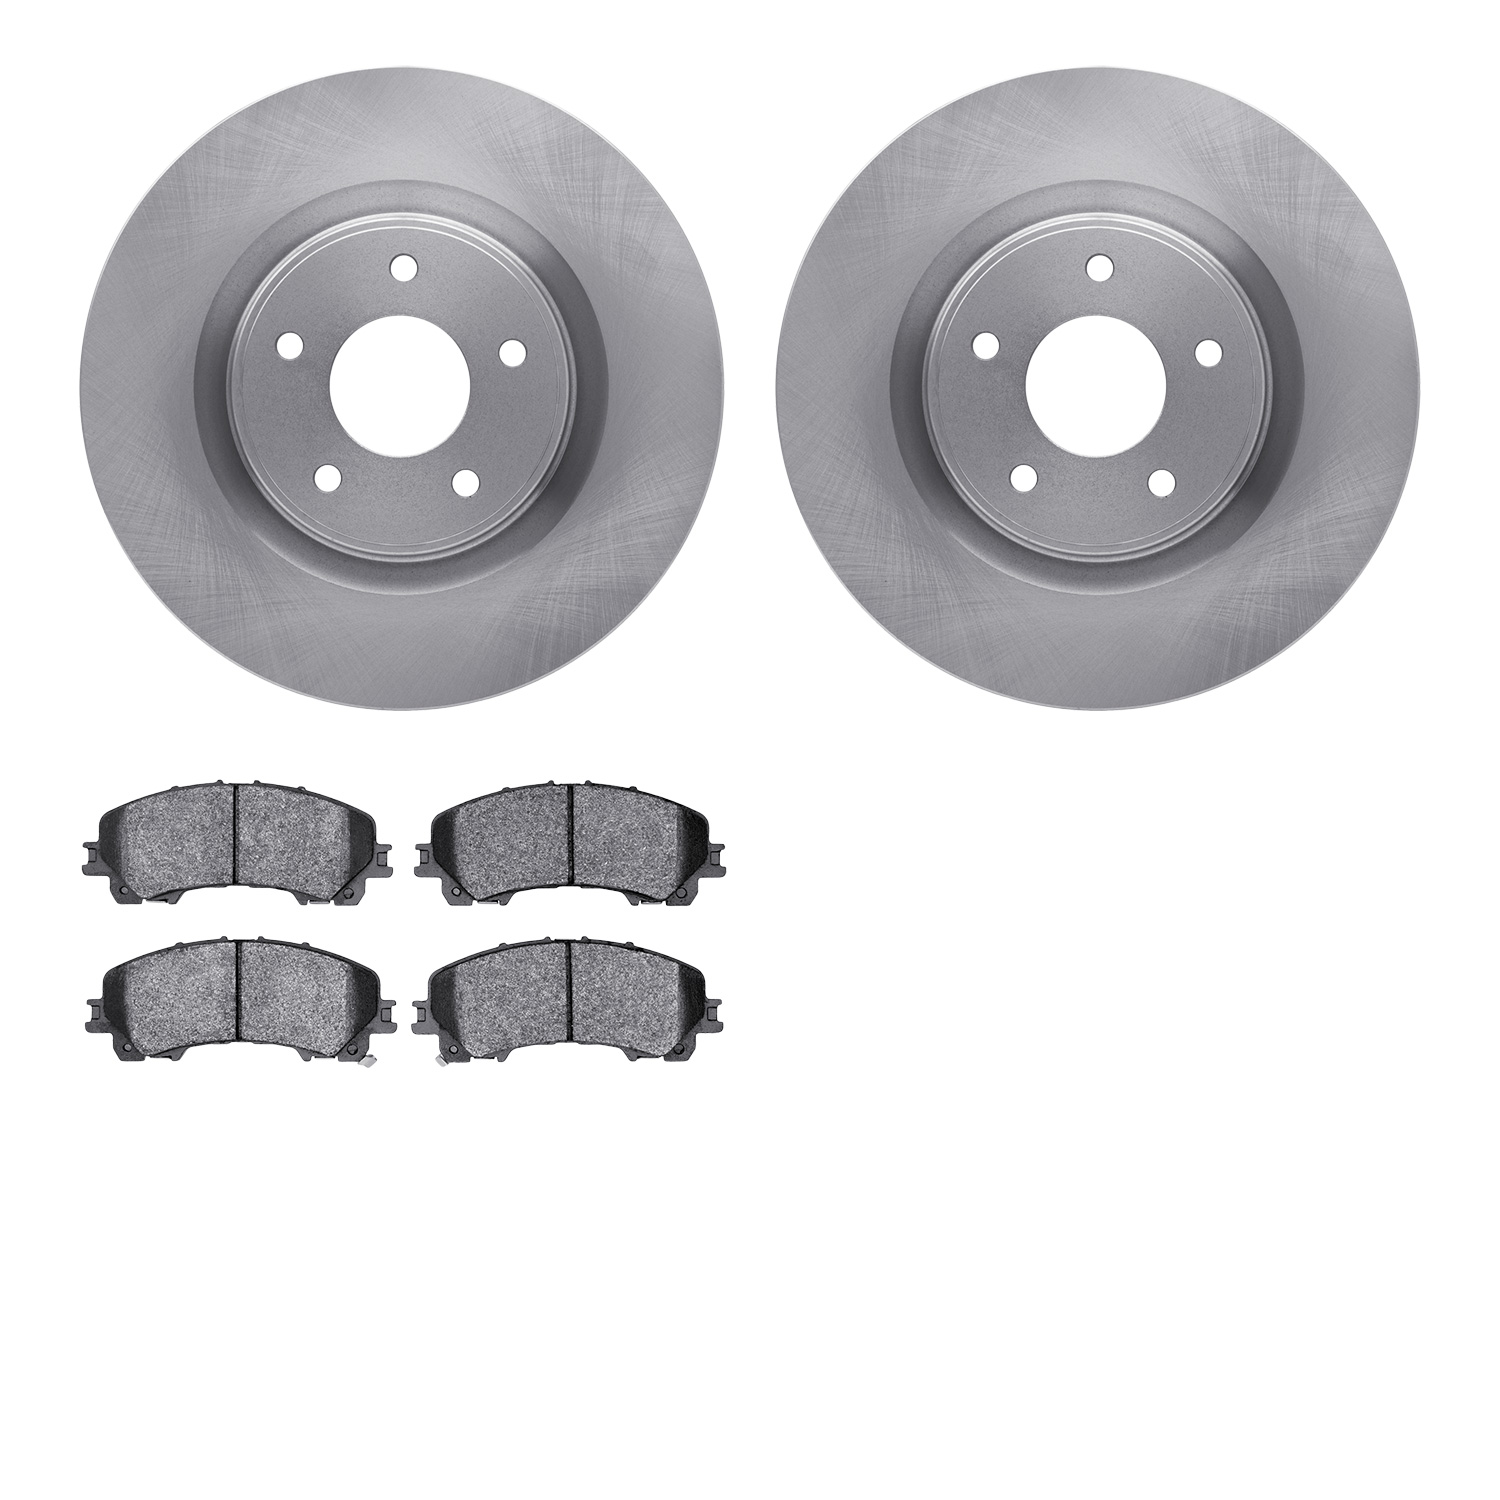 6302-67129 Brake Rotors with 3000-Series Ceramic Brake Pads Kit, Fits Select Infiniti/Nissan, Position: Front